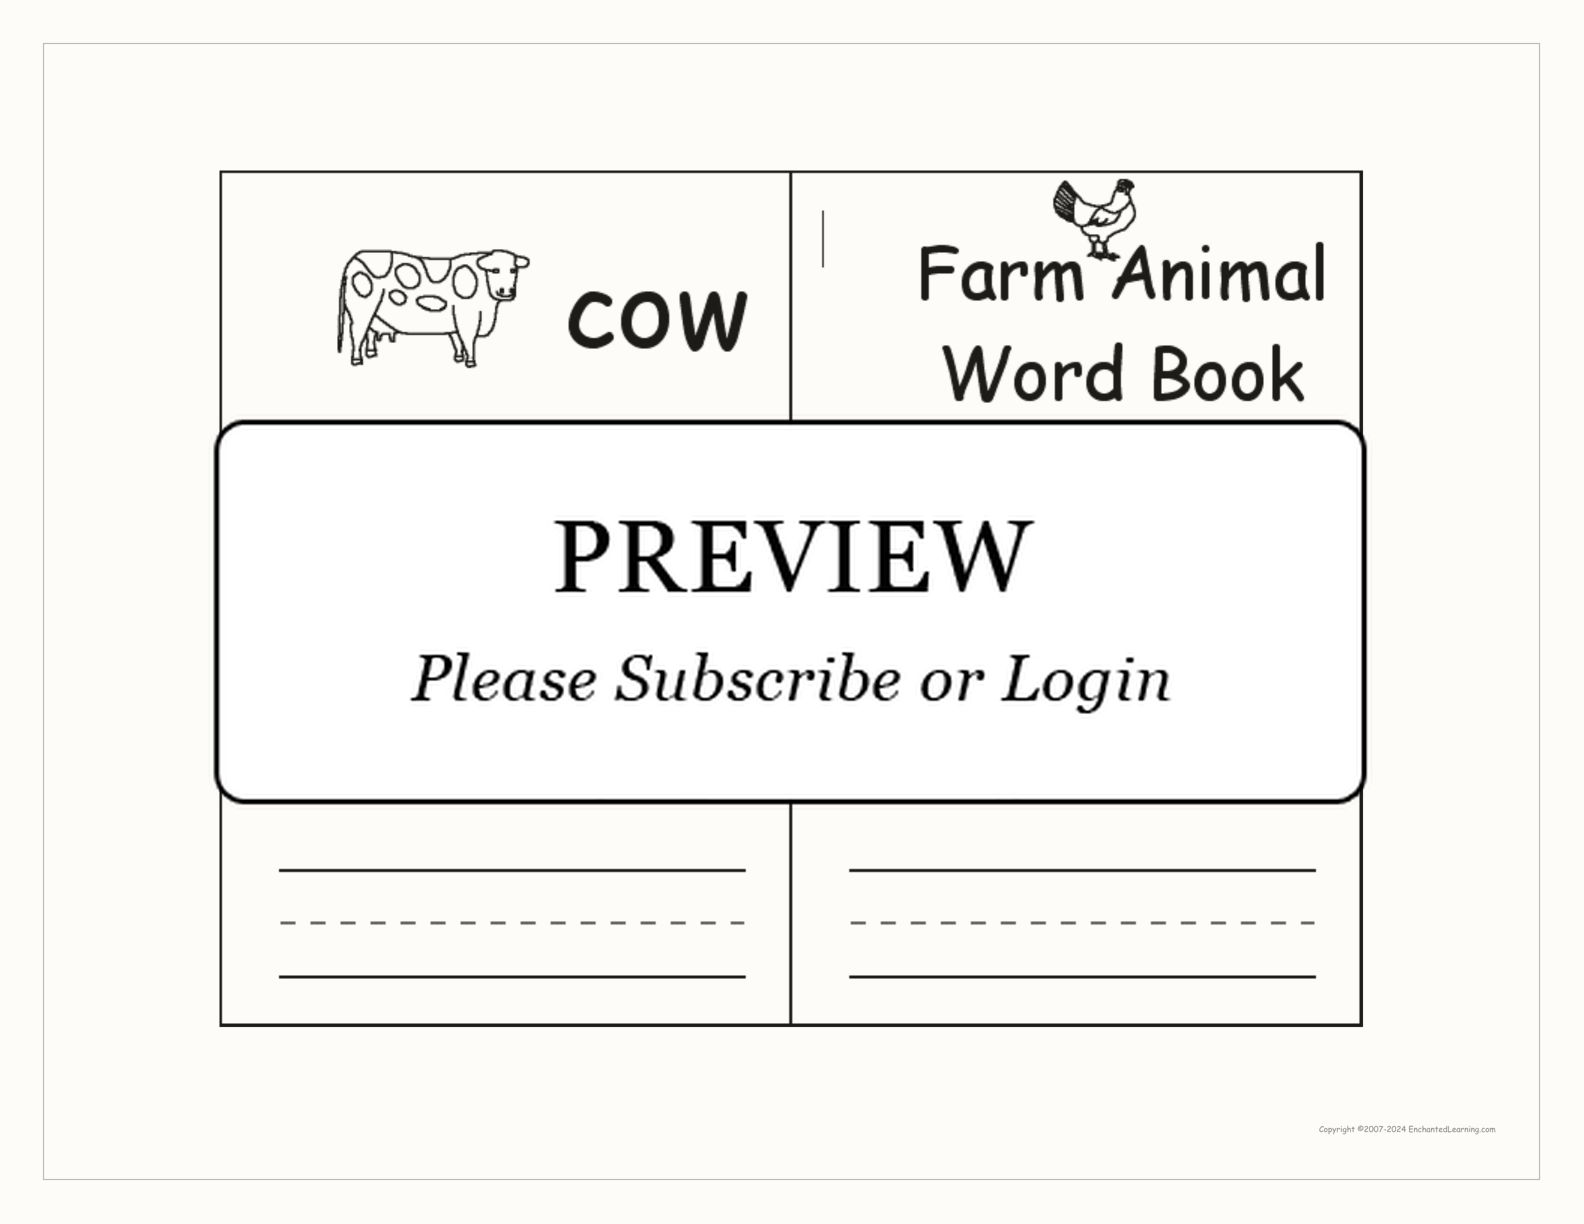 Farm Animal Word Book interactive printout page 1